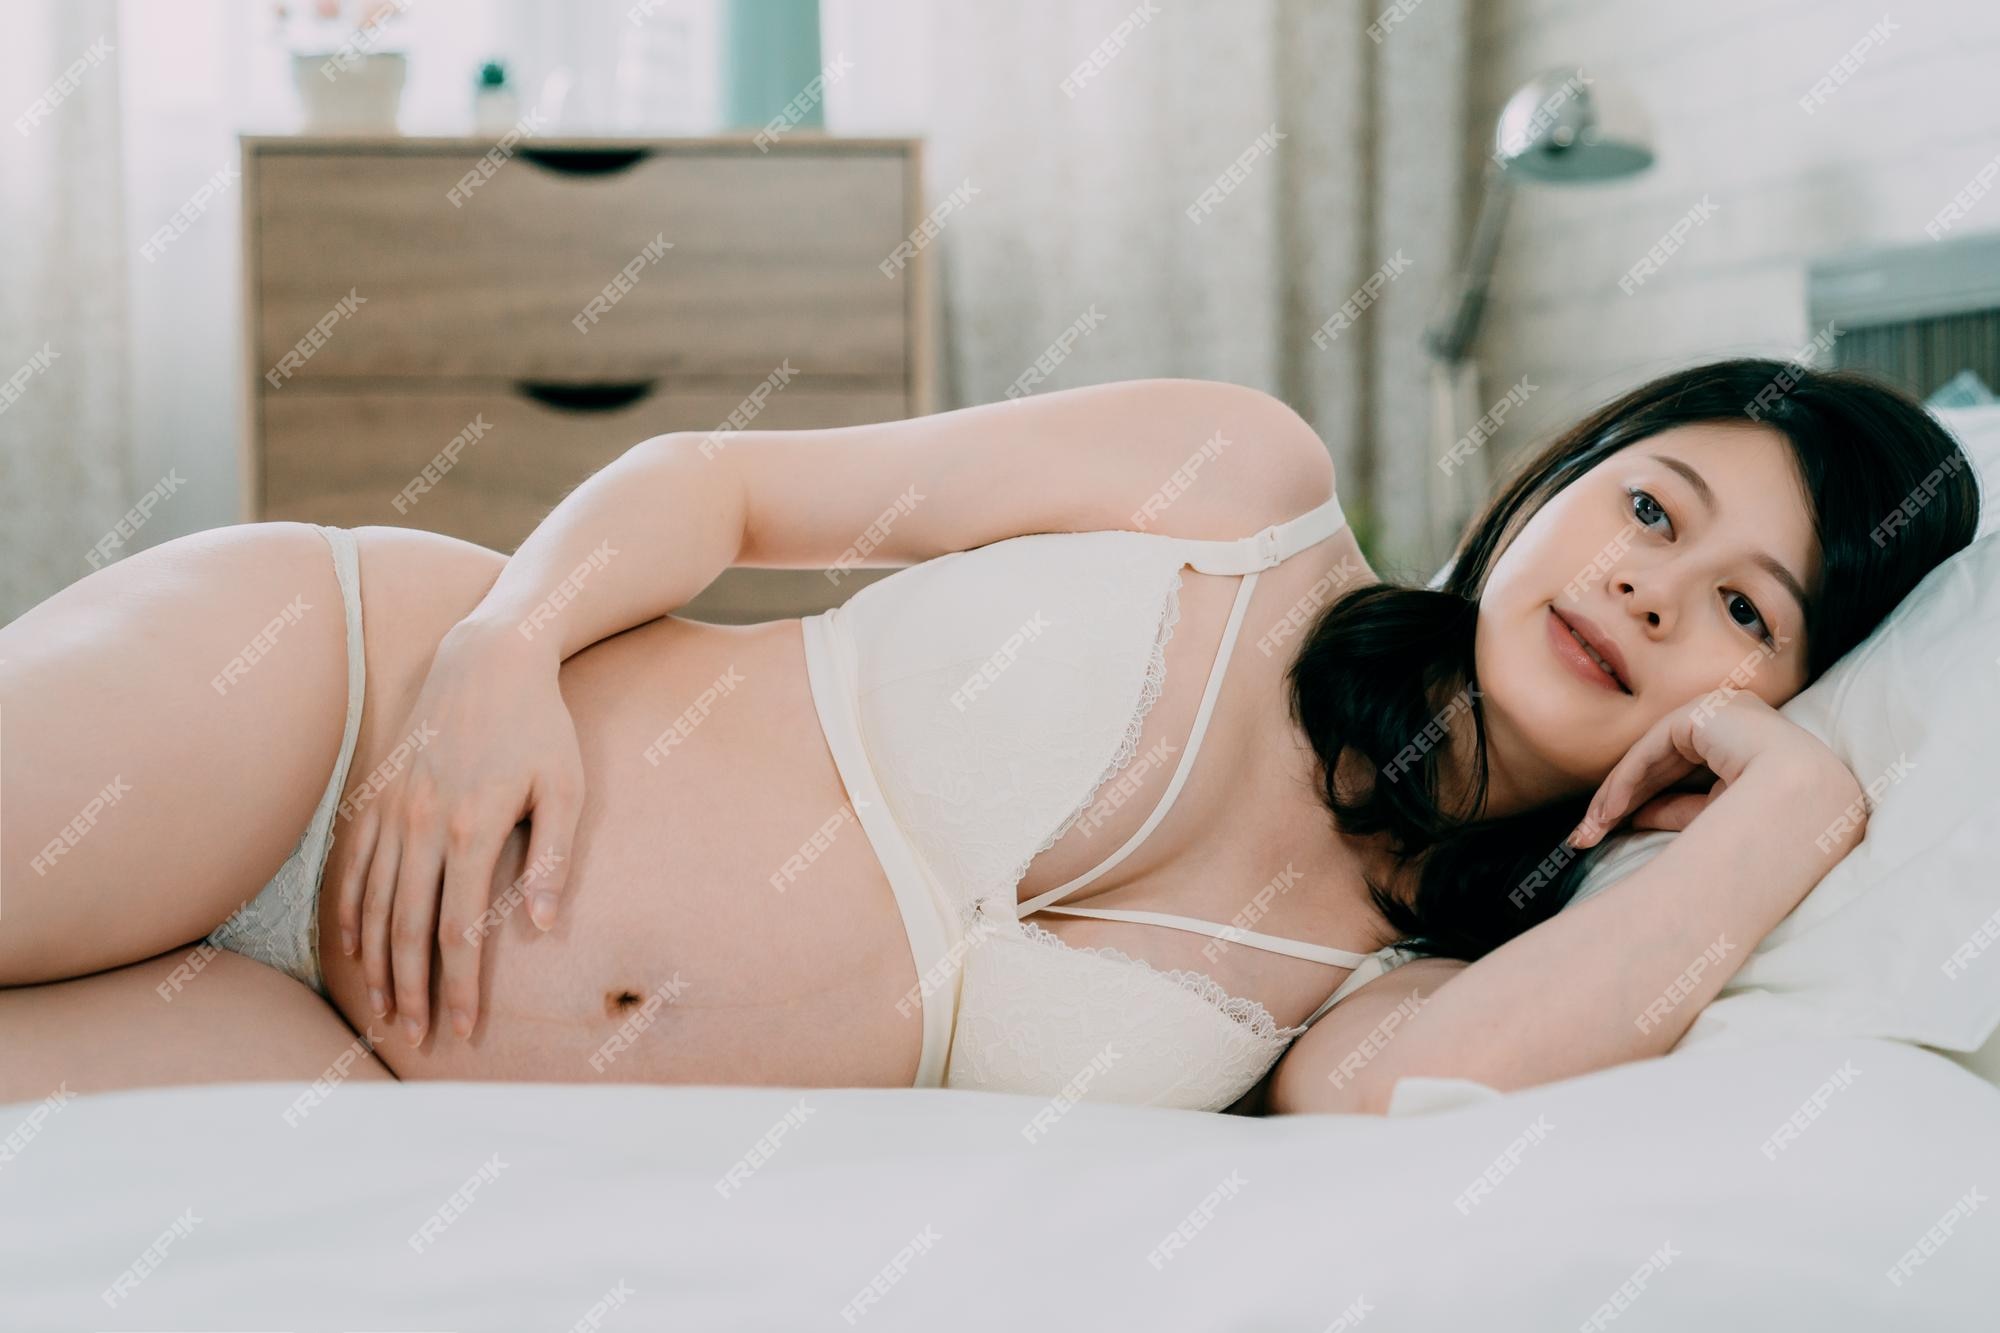 dan lefrancois share sexy pregnant japanese girls photos